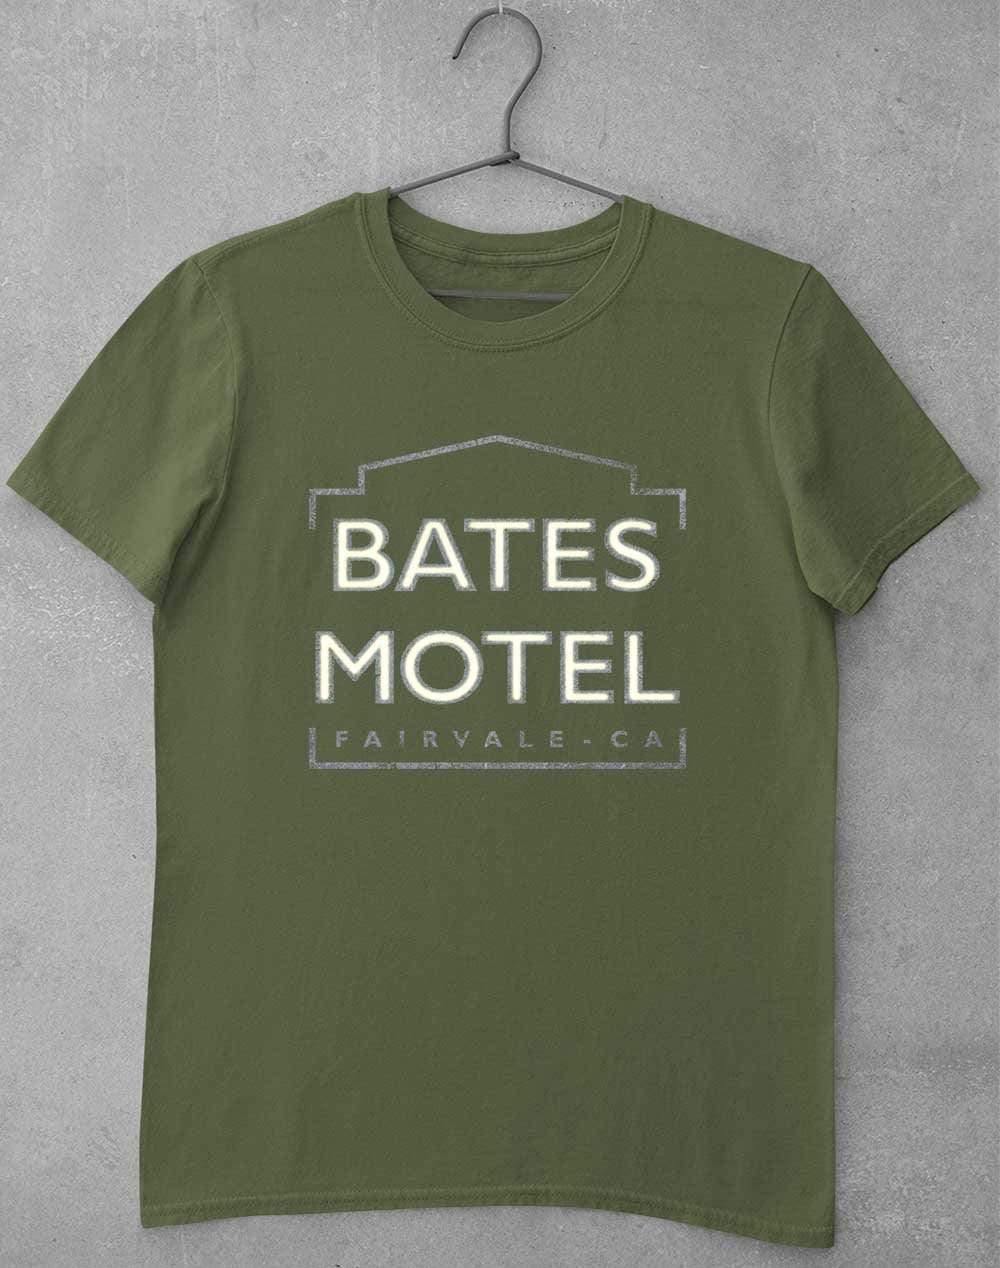 Bates Motel Sign T-Shirt S / Military Green  - Off World Tees